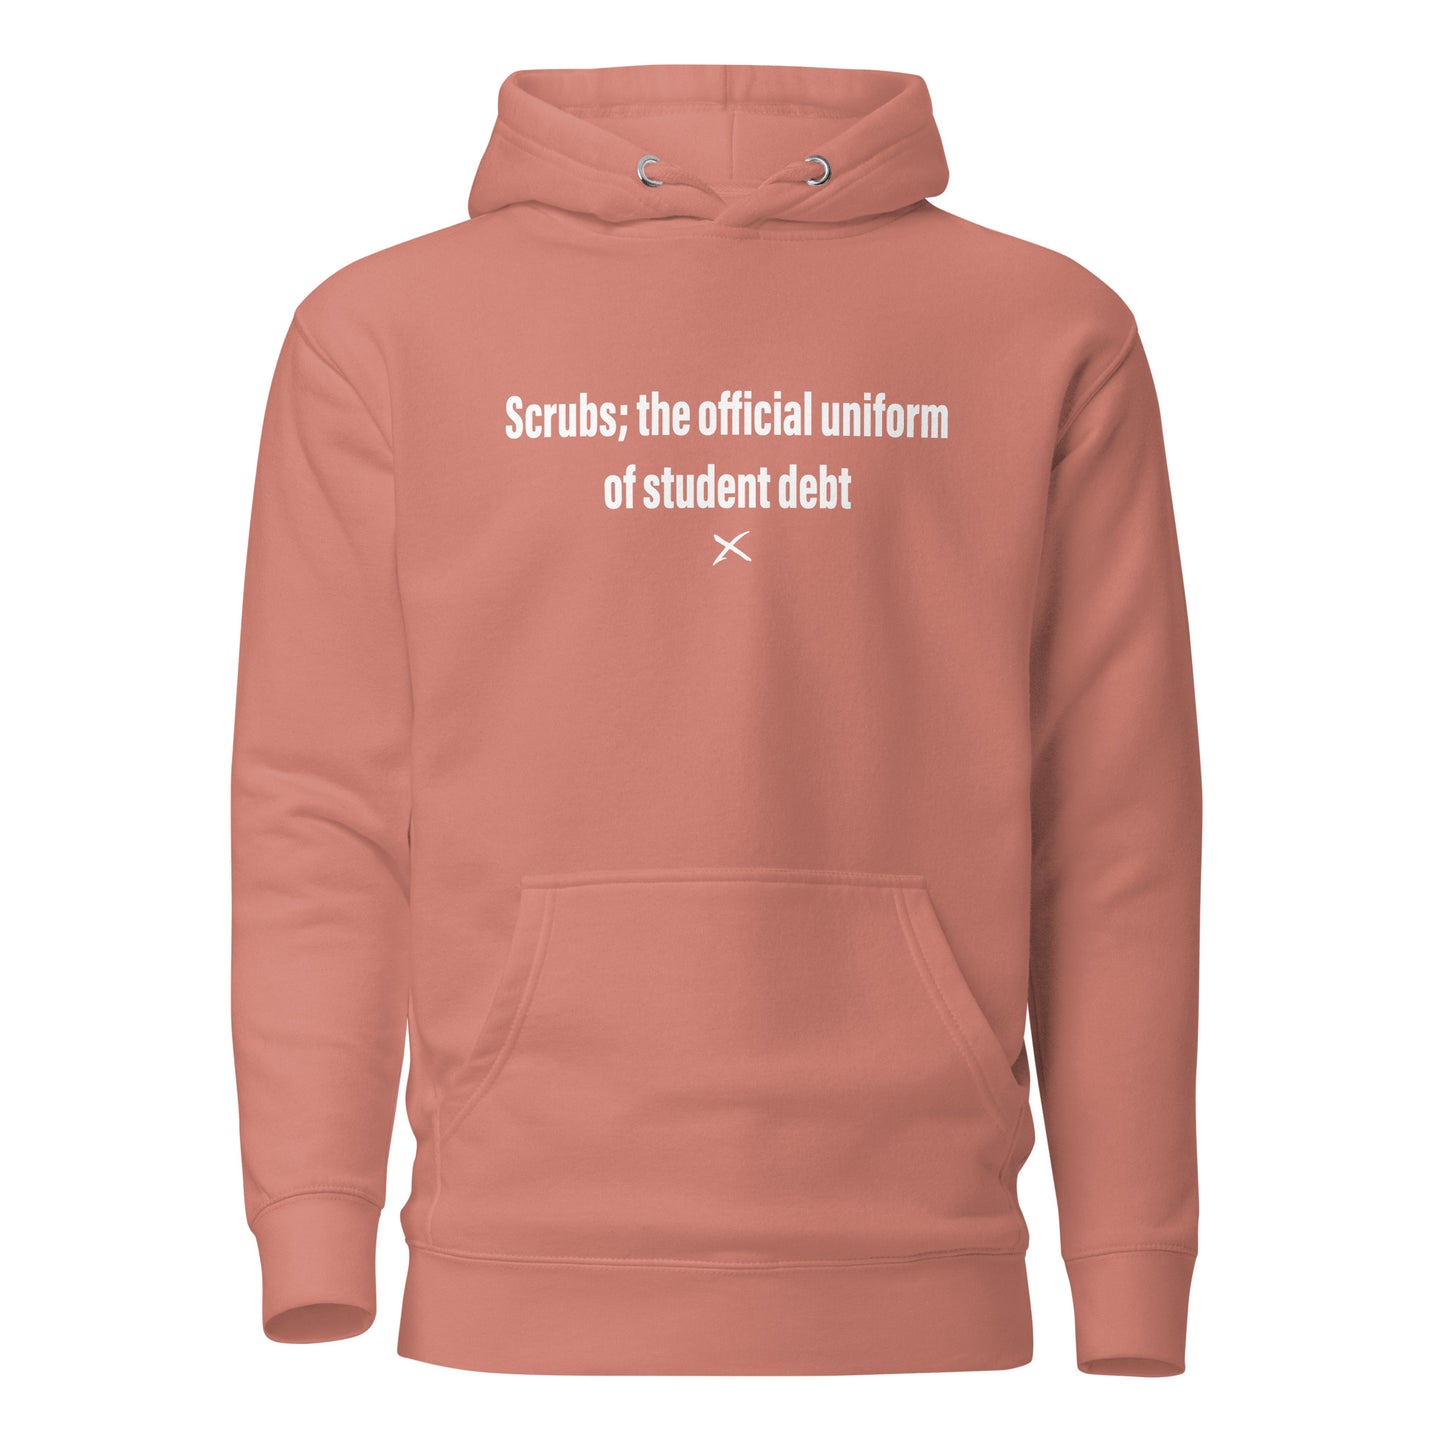 Scrubs; the official uniform of student debt - Hoodie